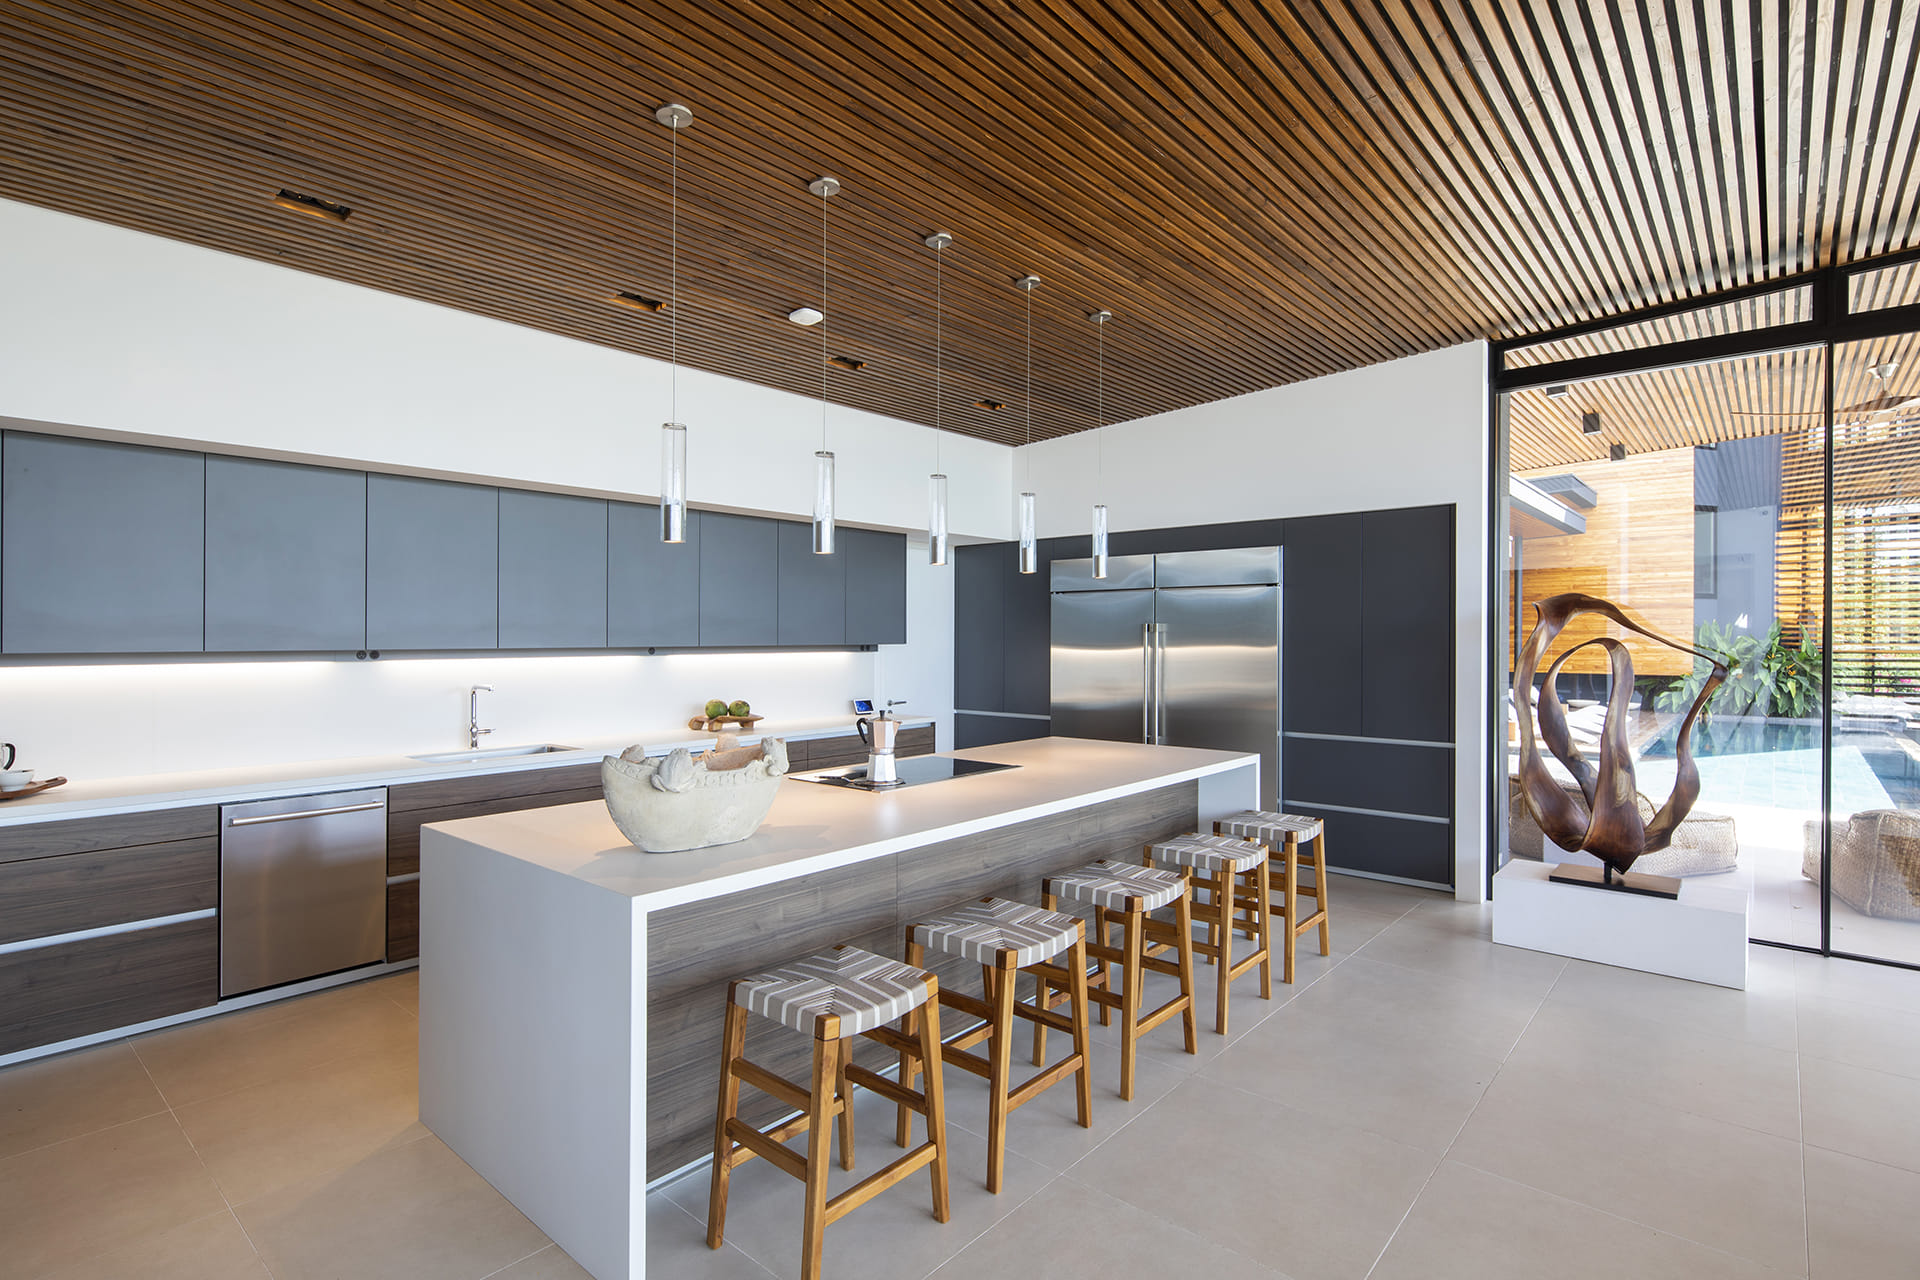 Santos kitchen with island and minimalist units